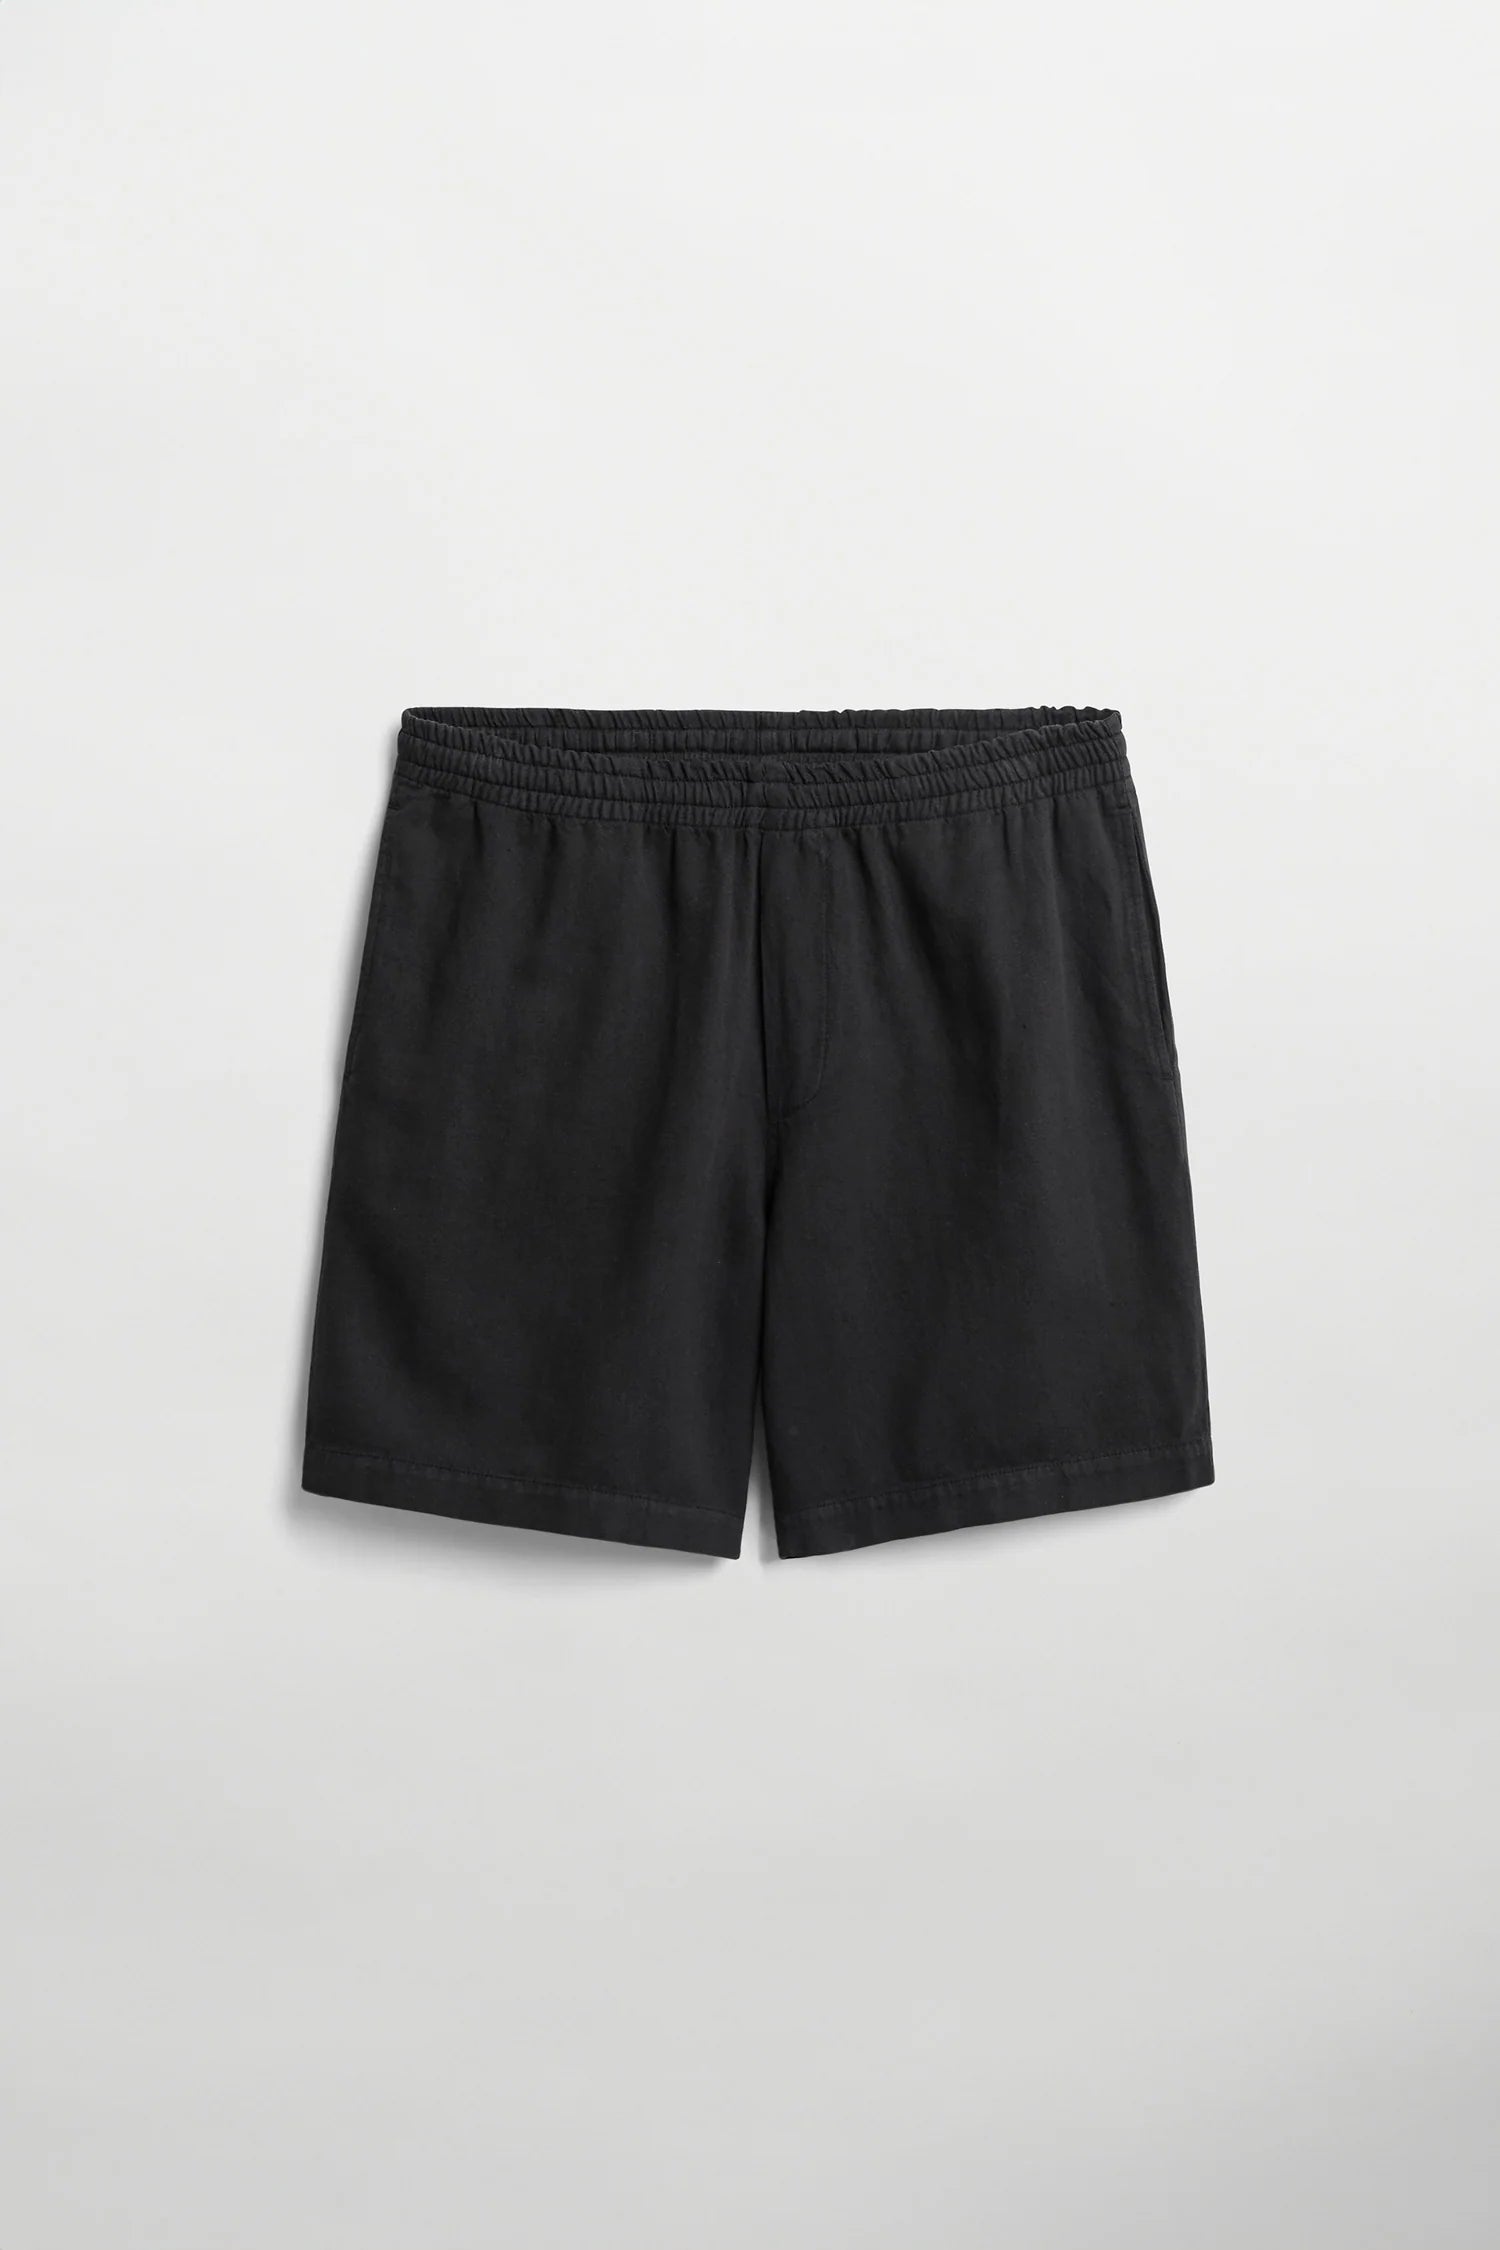 Elvine Ryan Linen Shorts, Black